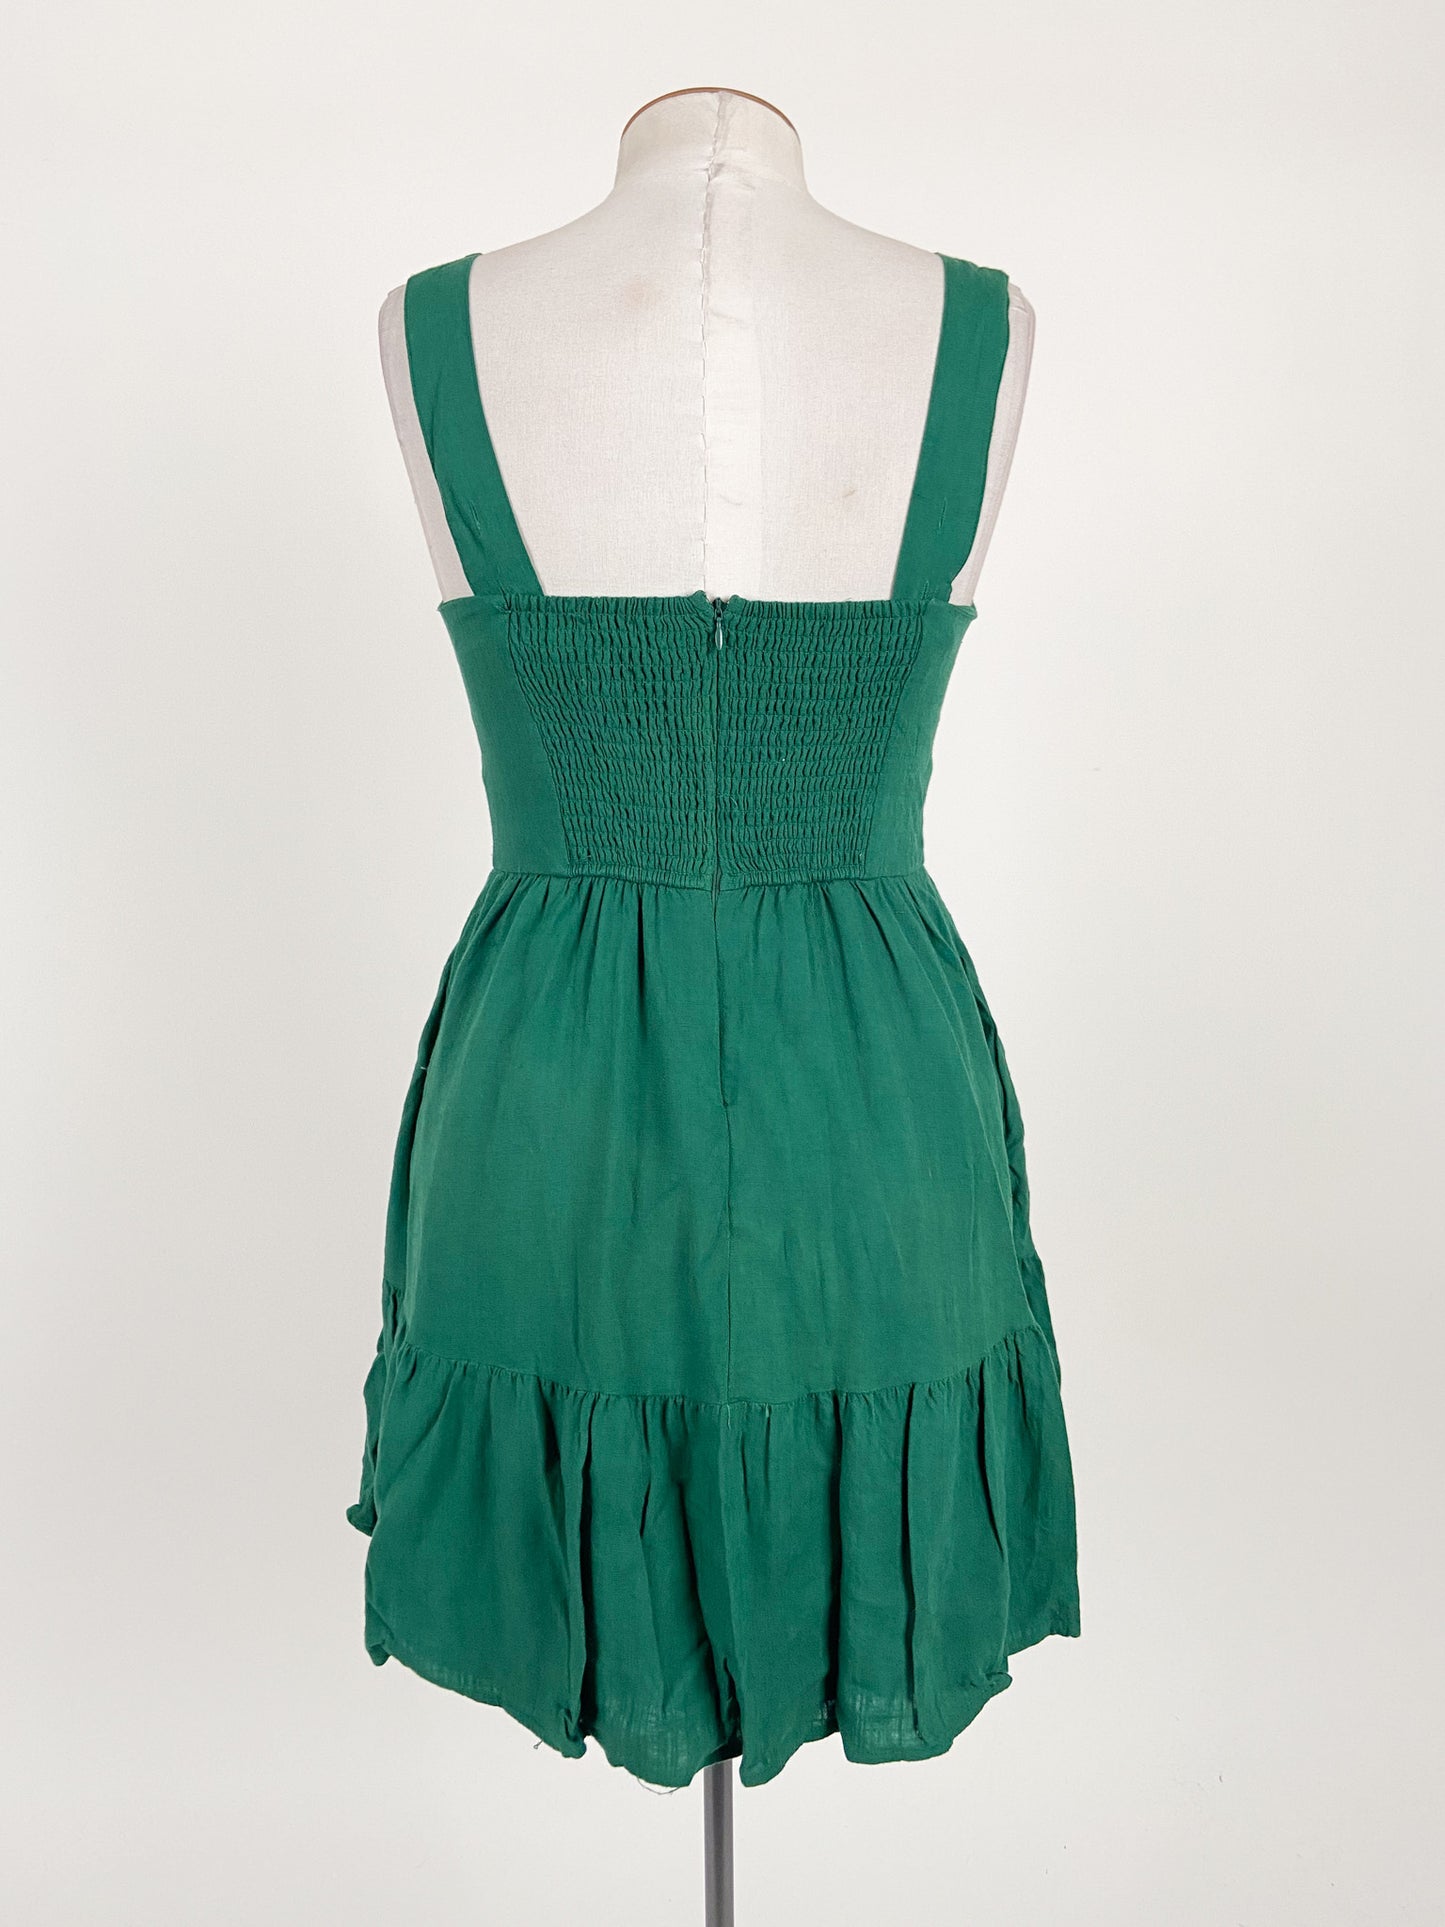 Dotti | Green Casual/Workwear Dress | Size 10